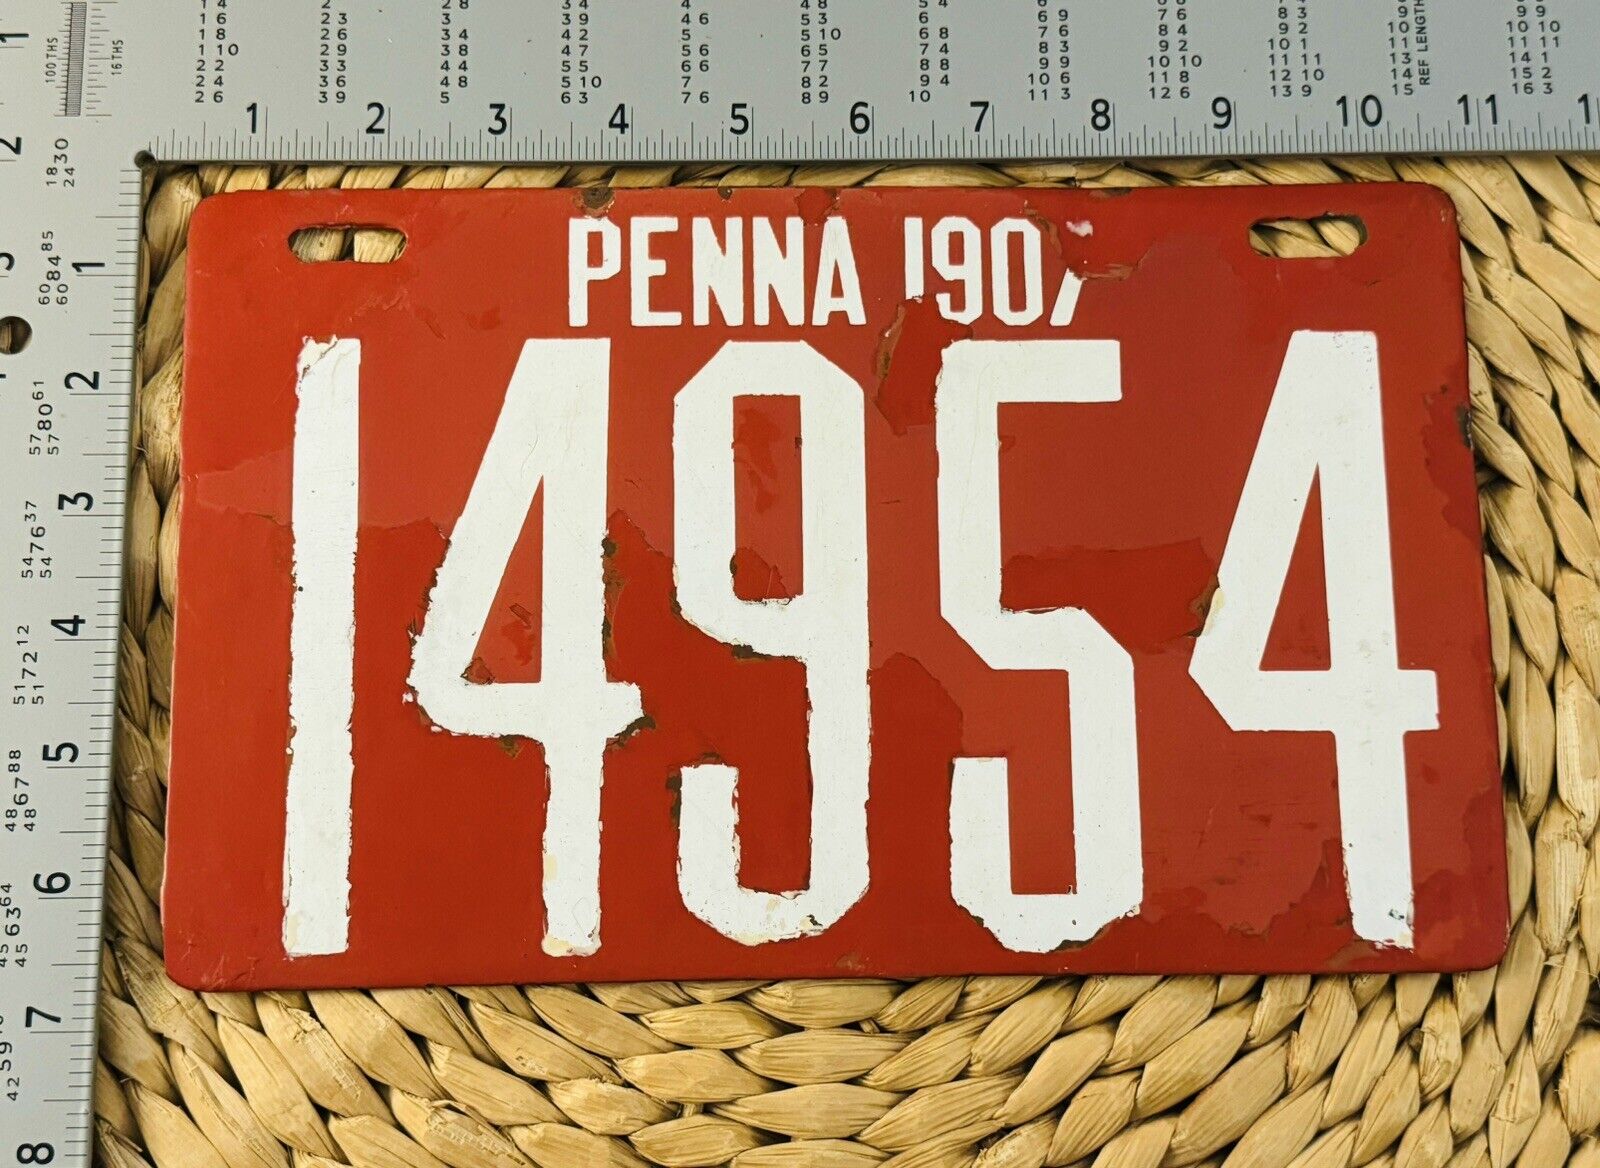 1907 Pennsylvania Porcelain License Plate 14954 ALPCA STERN CONSIGNMENT TU